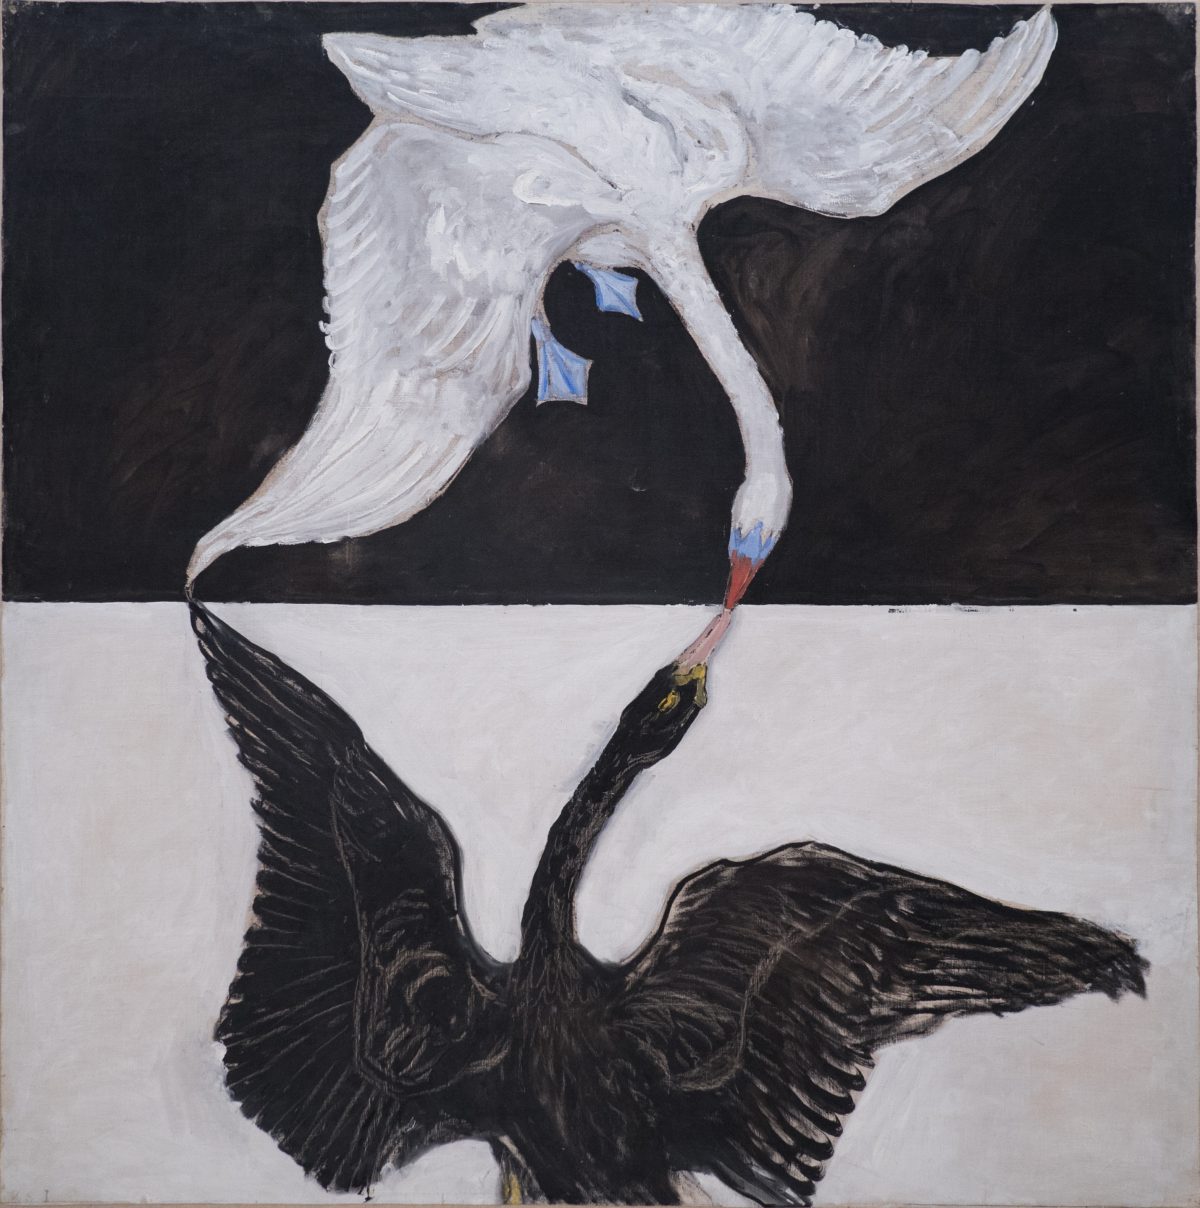 Group IX/SUW, The Swan, No. 1, 1915